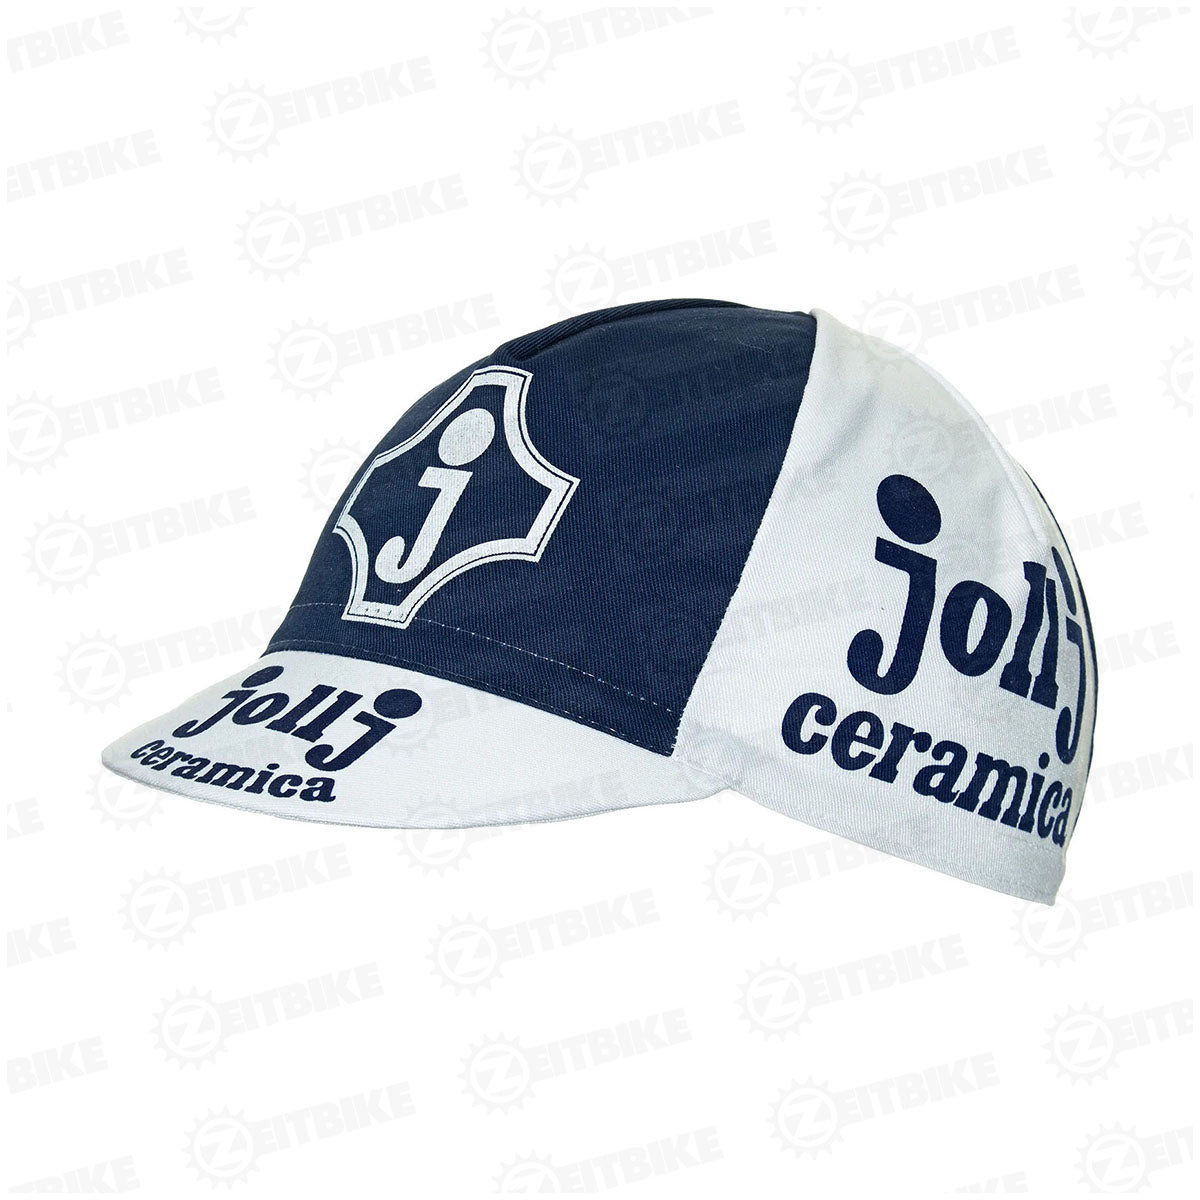 ZEITBIKE - Vintage Cycling Cap - Jollj Ceramica  | Anti Sweat Caps | for Stand Alone or Under Helmet | Team Jersey Cap Outdoor Cap